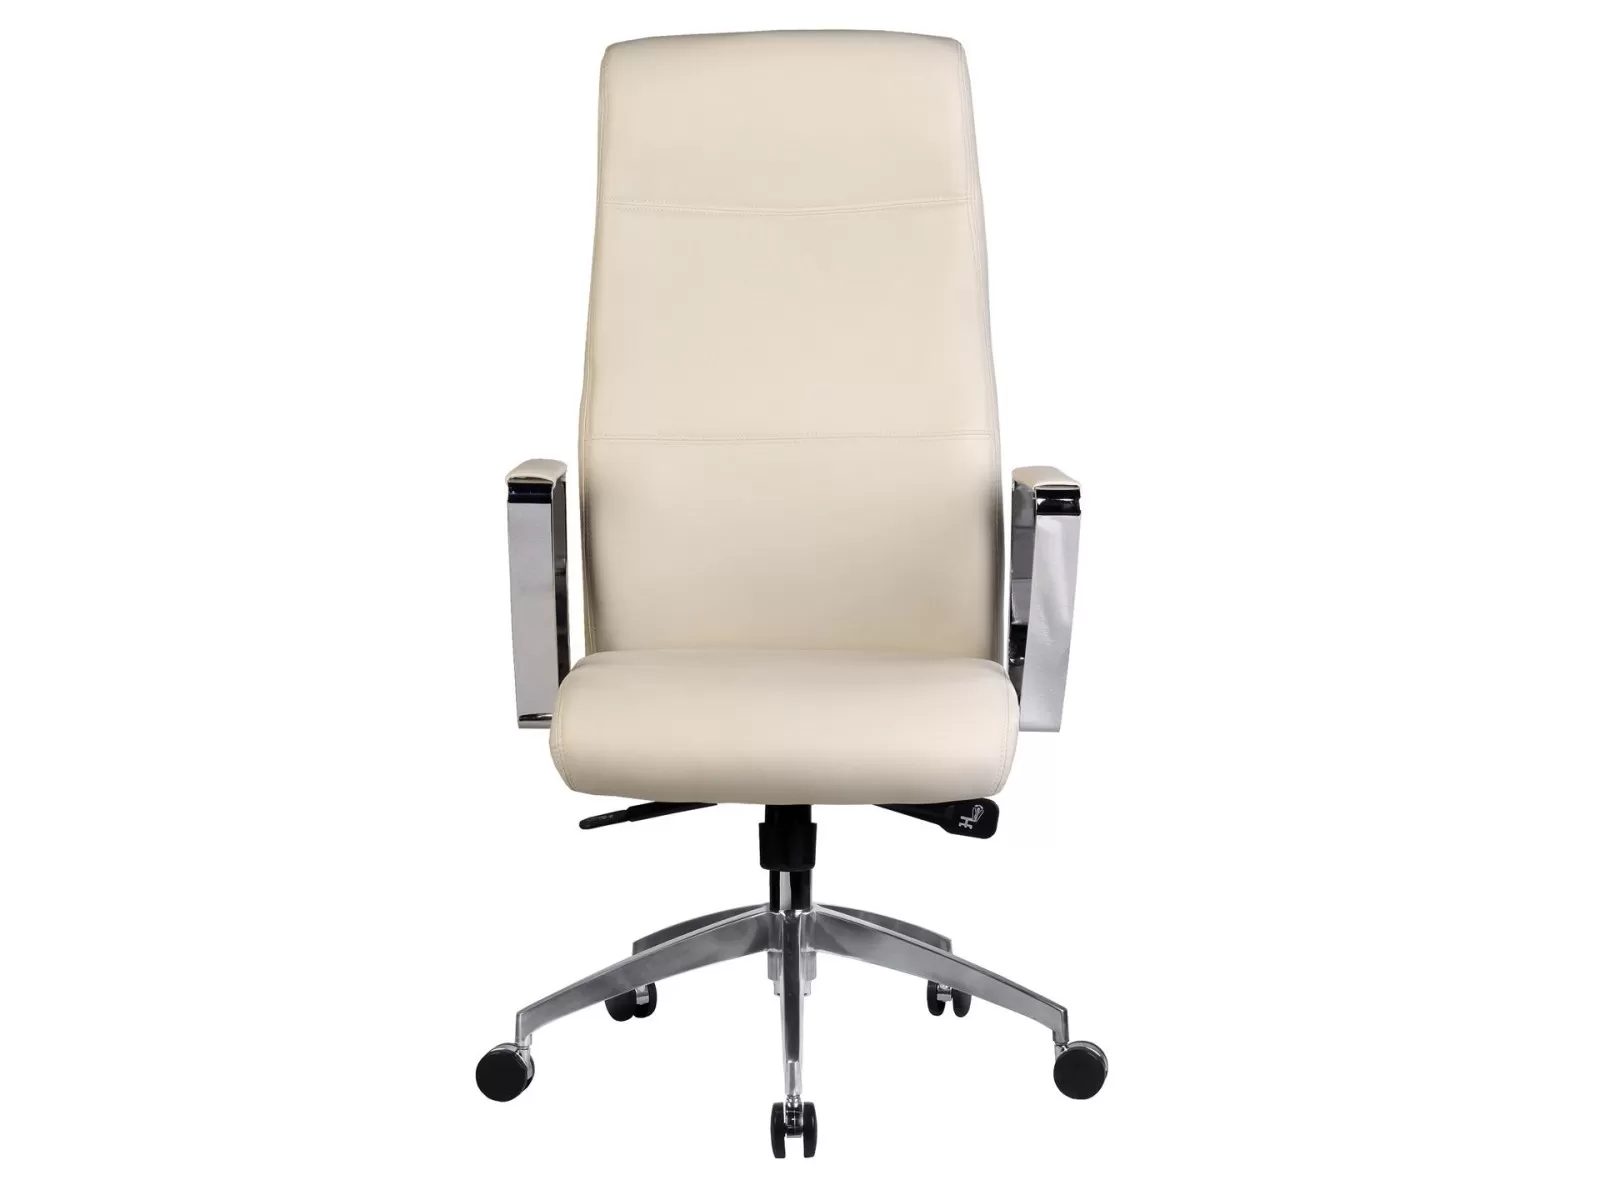 Компьютерное кресло Riva Chair 9208